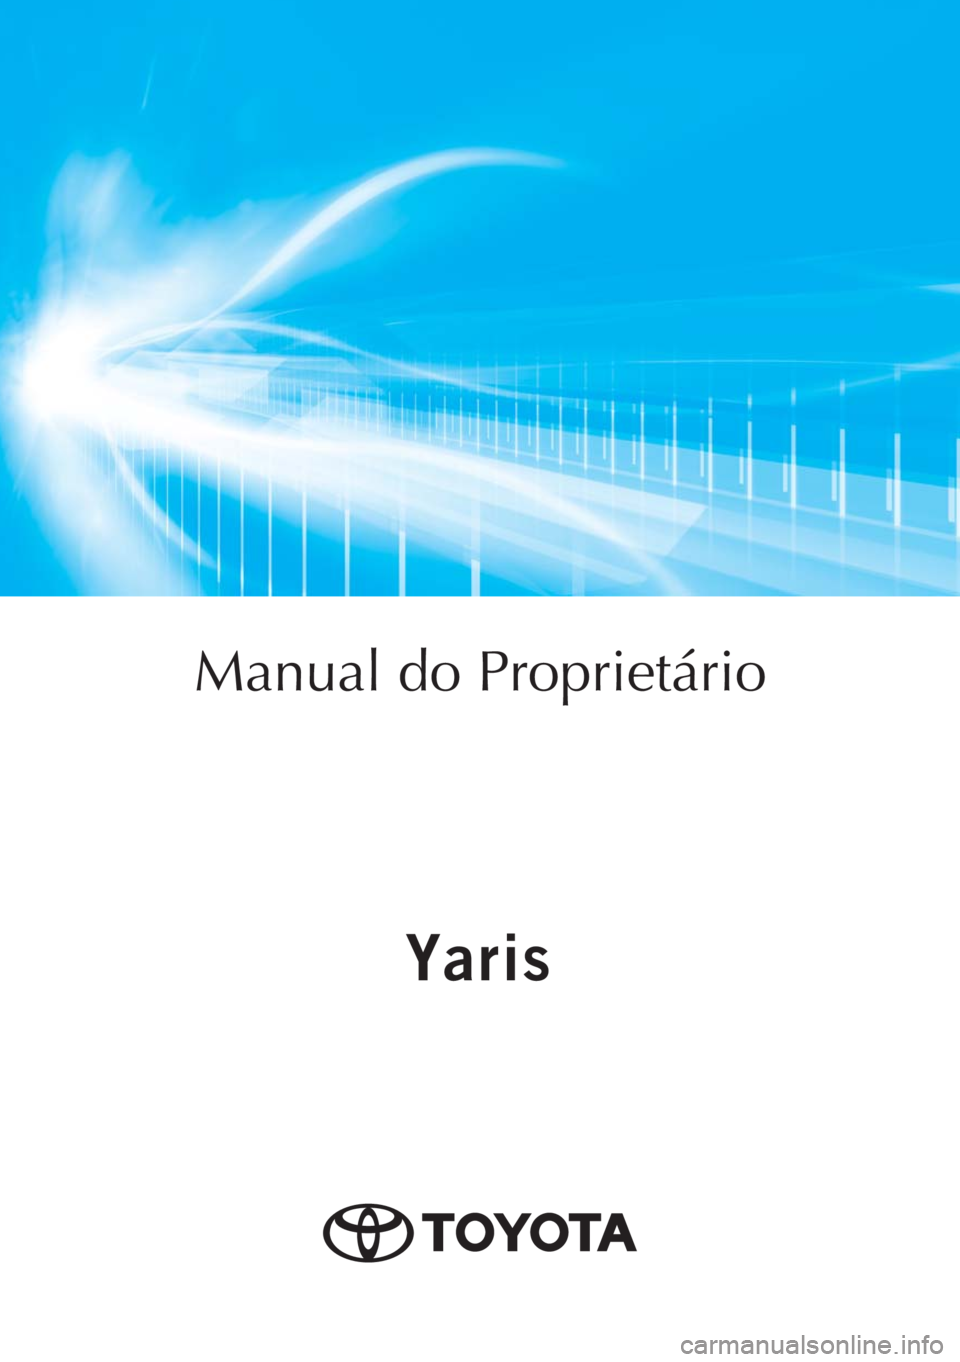 TOYOTA YARIS HATCHBACK 2019  Manual de utilização (in Portuguese) Yaris
Yaris
Manual do Proprietário
Mod. OM52A54PT
Public. N.º OM52A54E
ORGAL-PORTO 